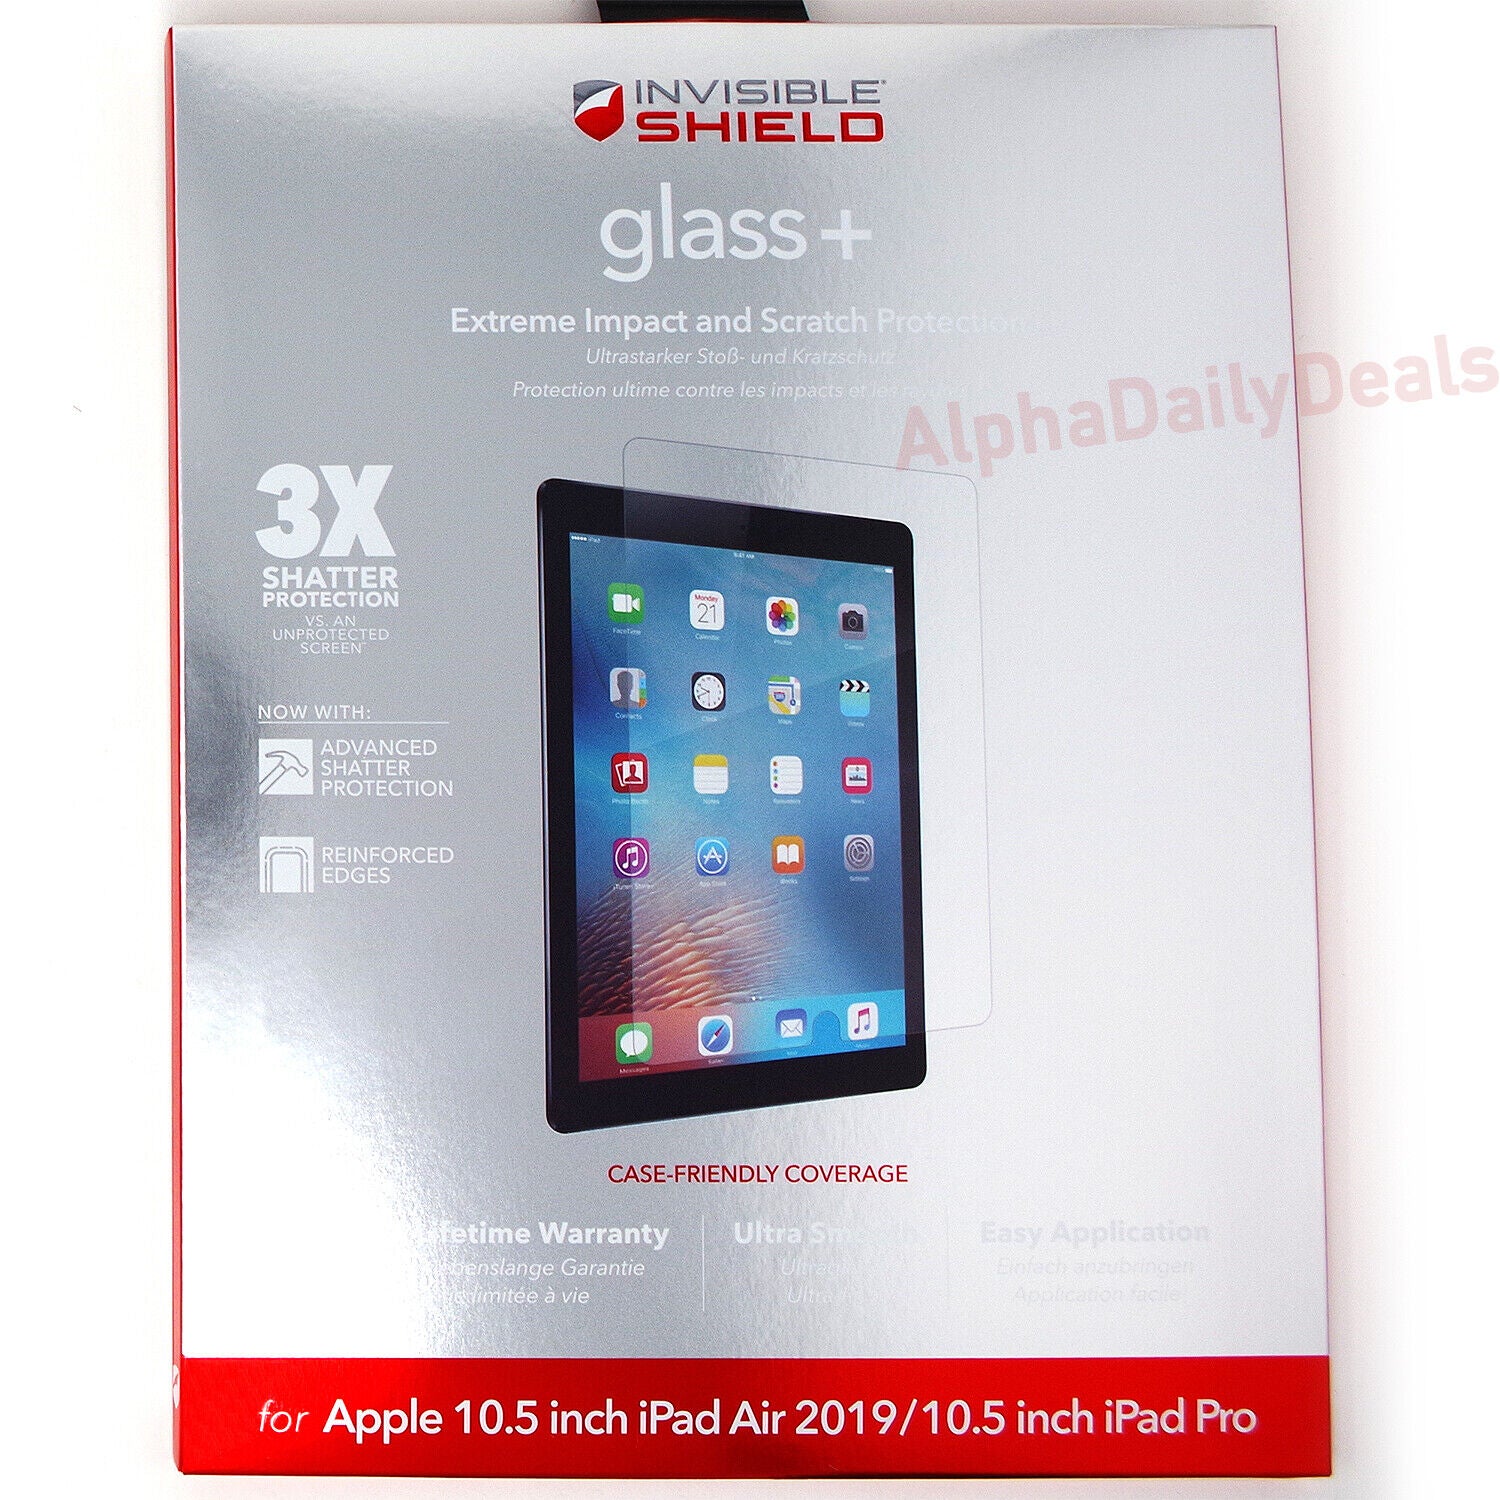 ZAGG iPad Pro 10.5" iPad Air 3 (2019) Screen Protector Invisible Shield Glass+